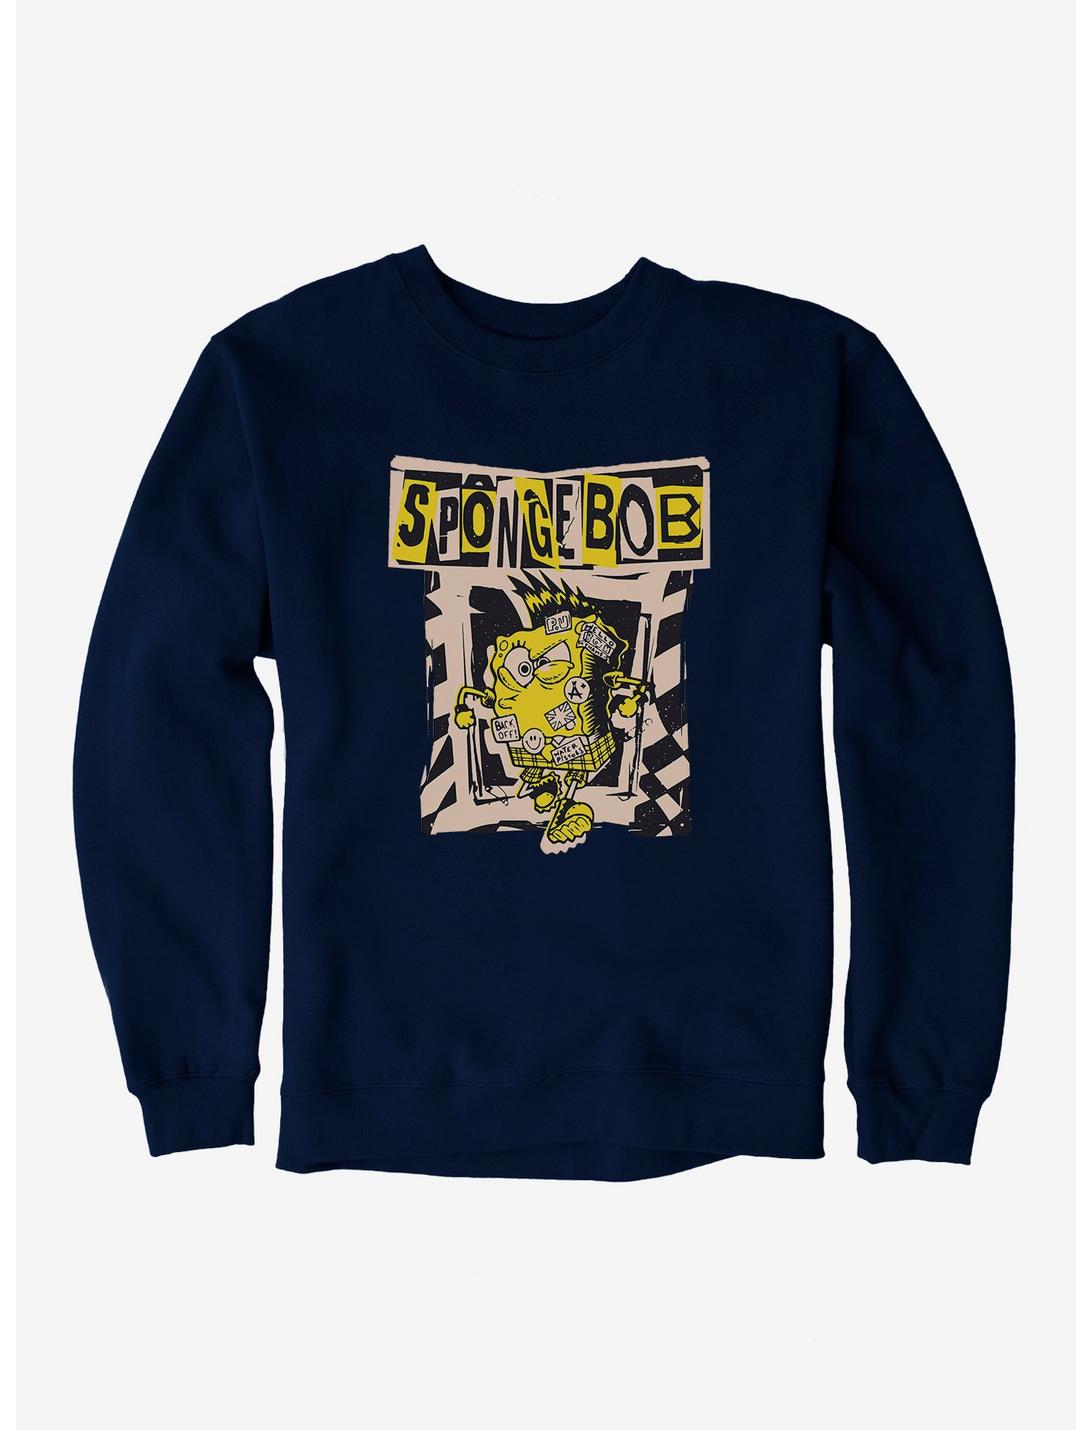 SpongeBob SquarePants Punk Attitude Sweatshirt, NAVY, hi-res